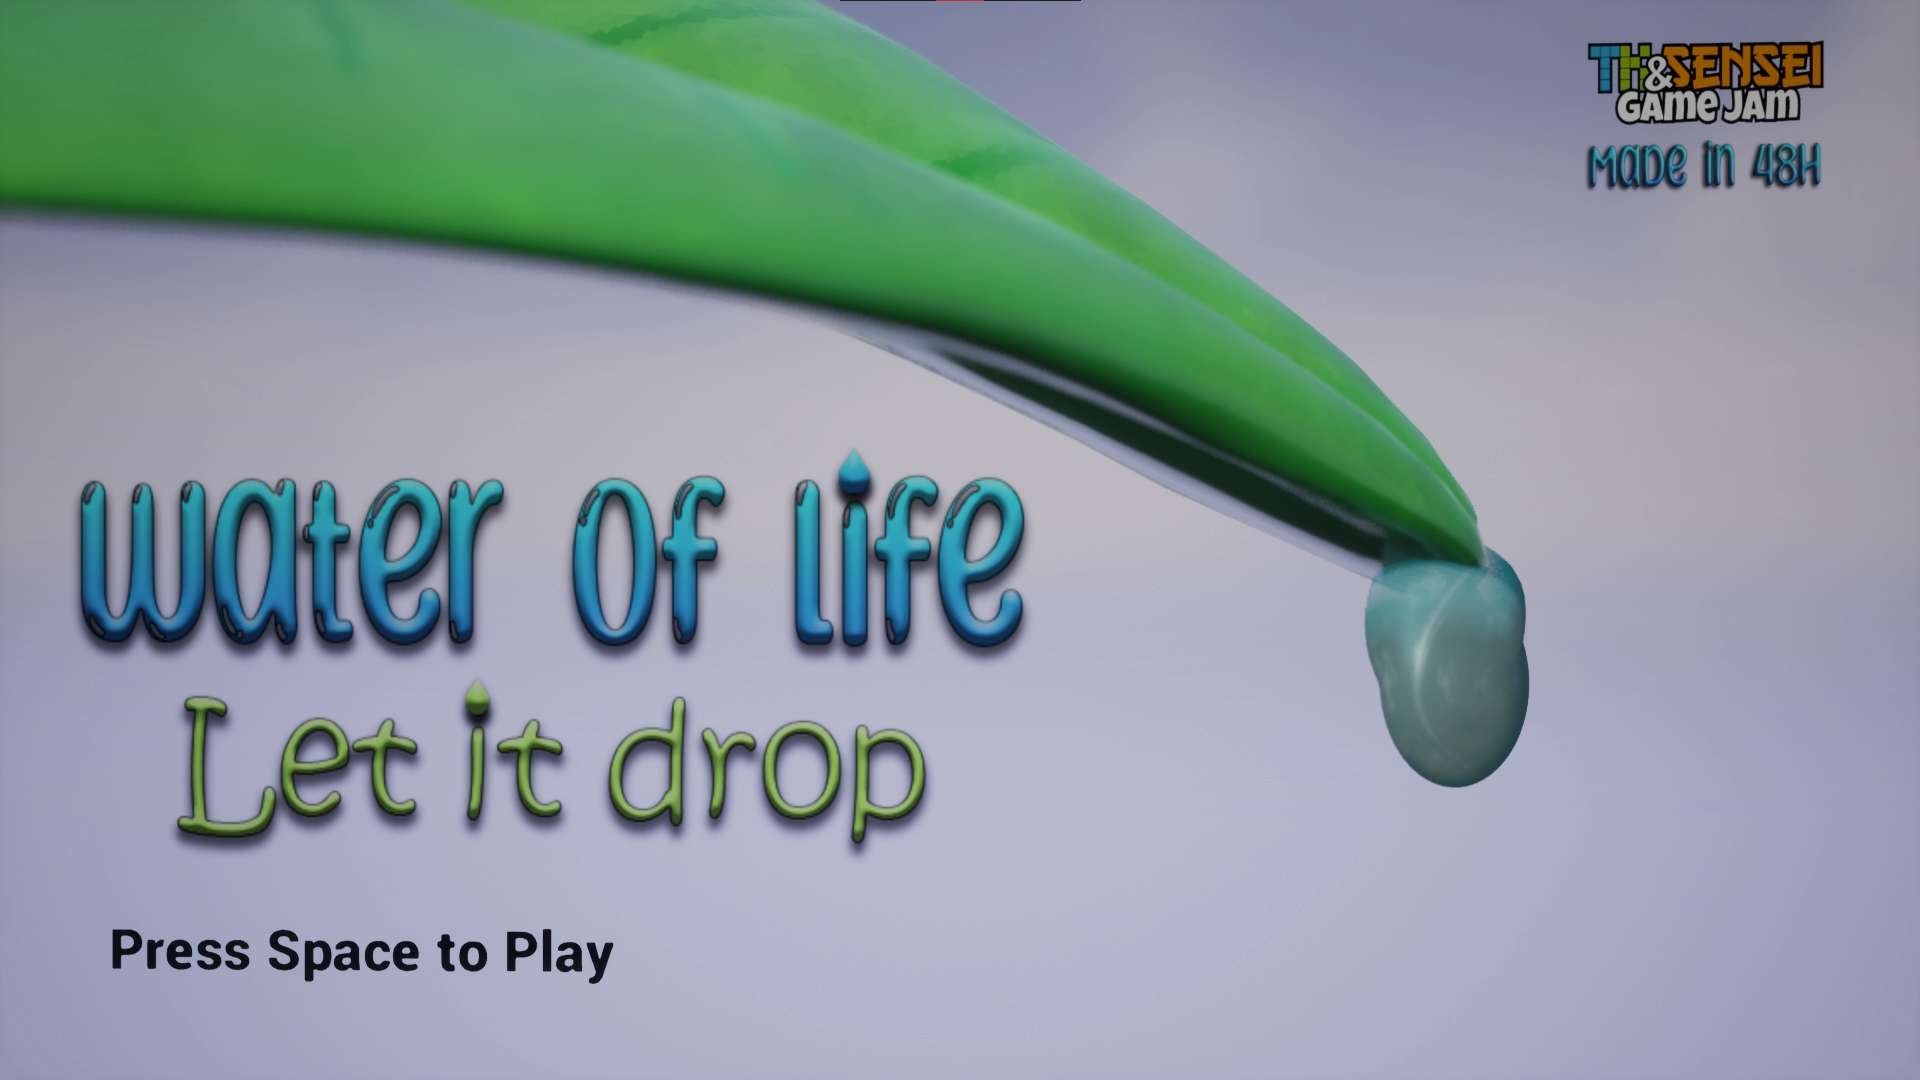 Water of life: Let it drop